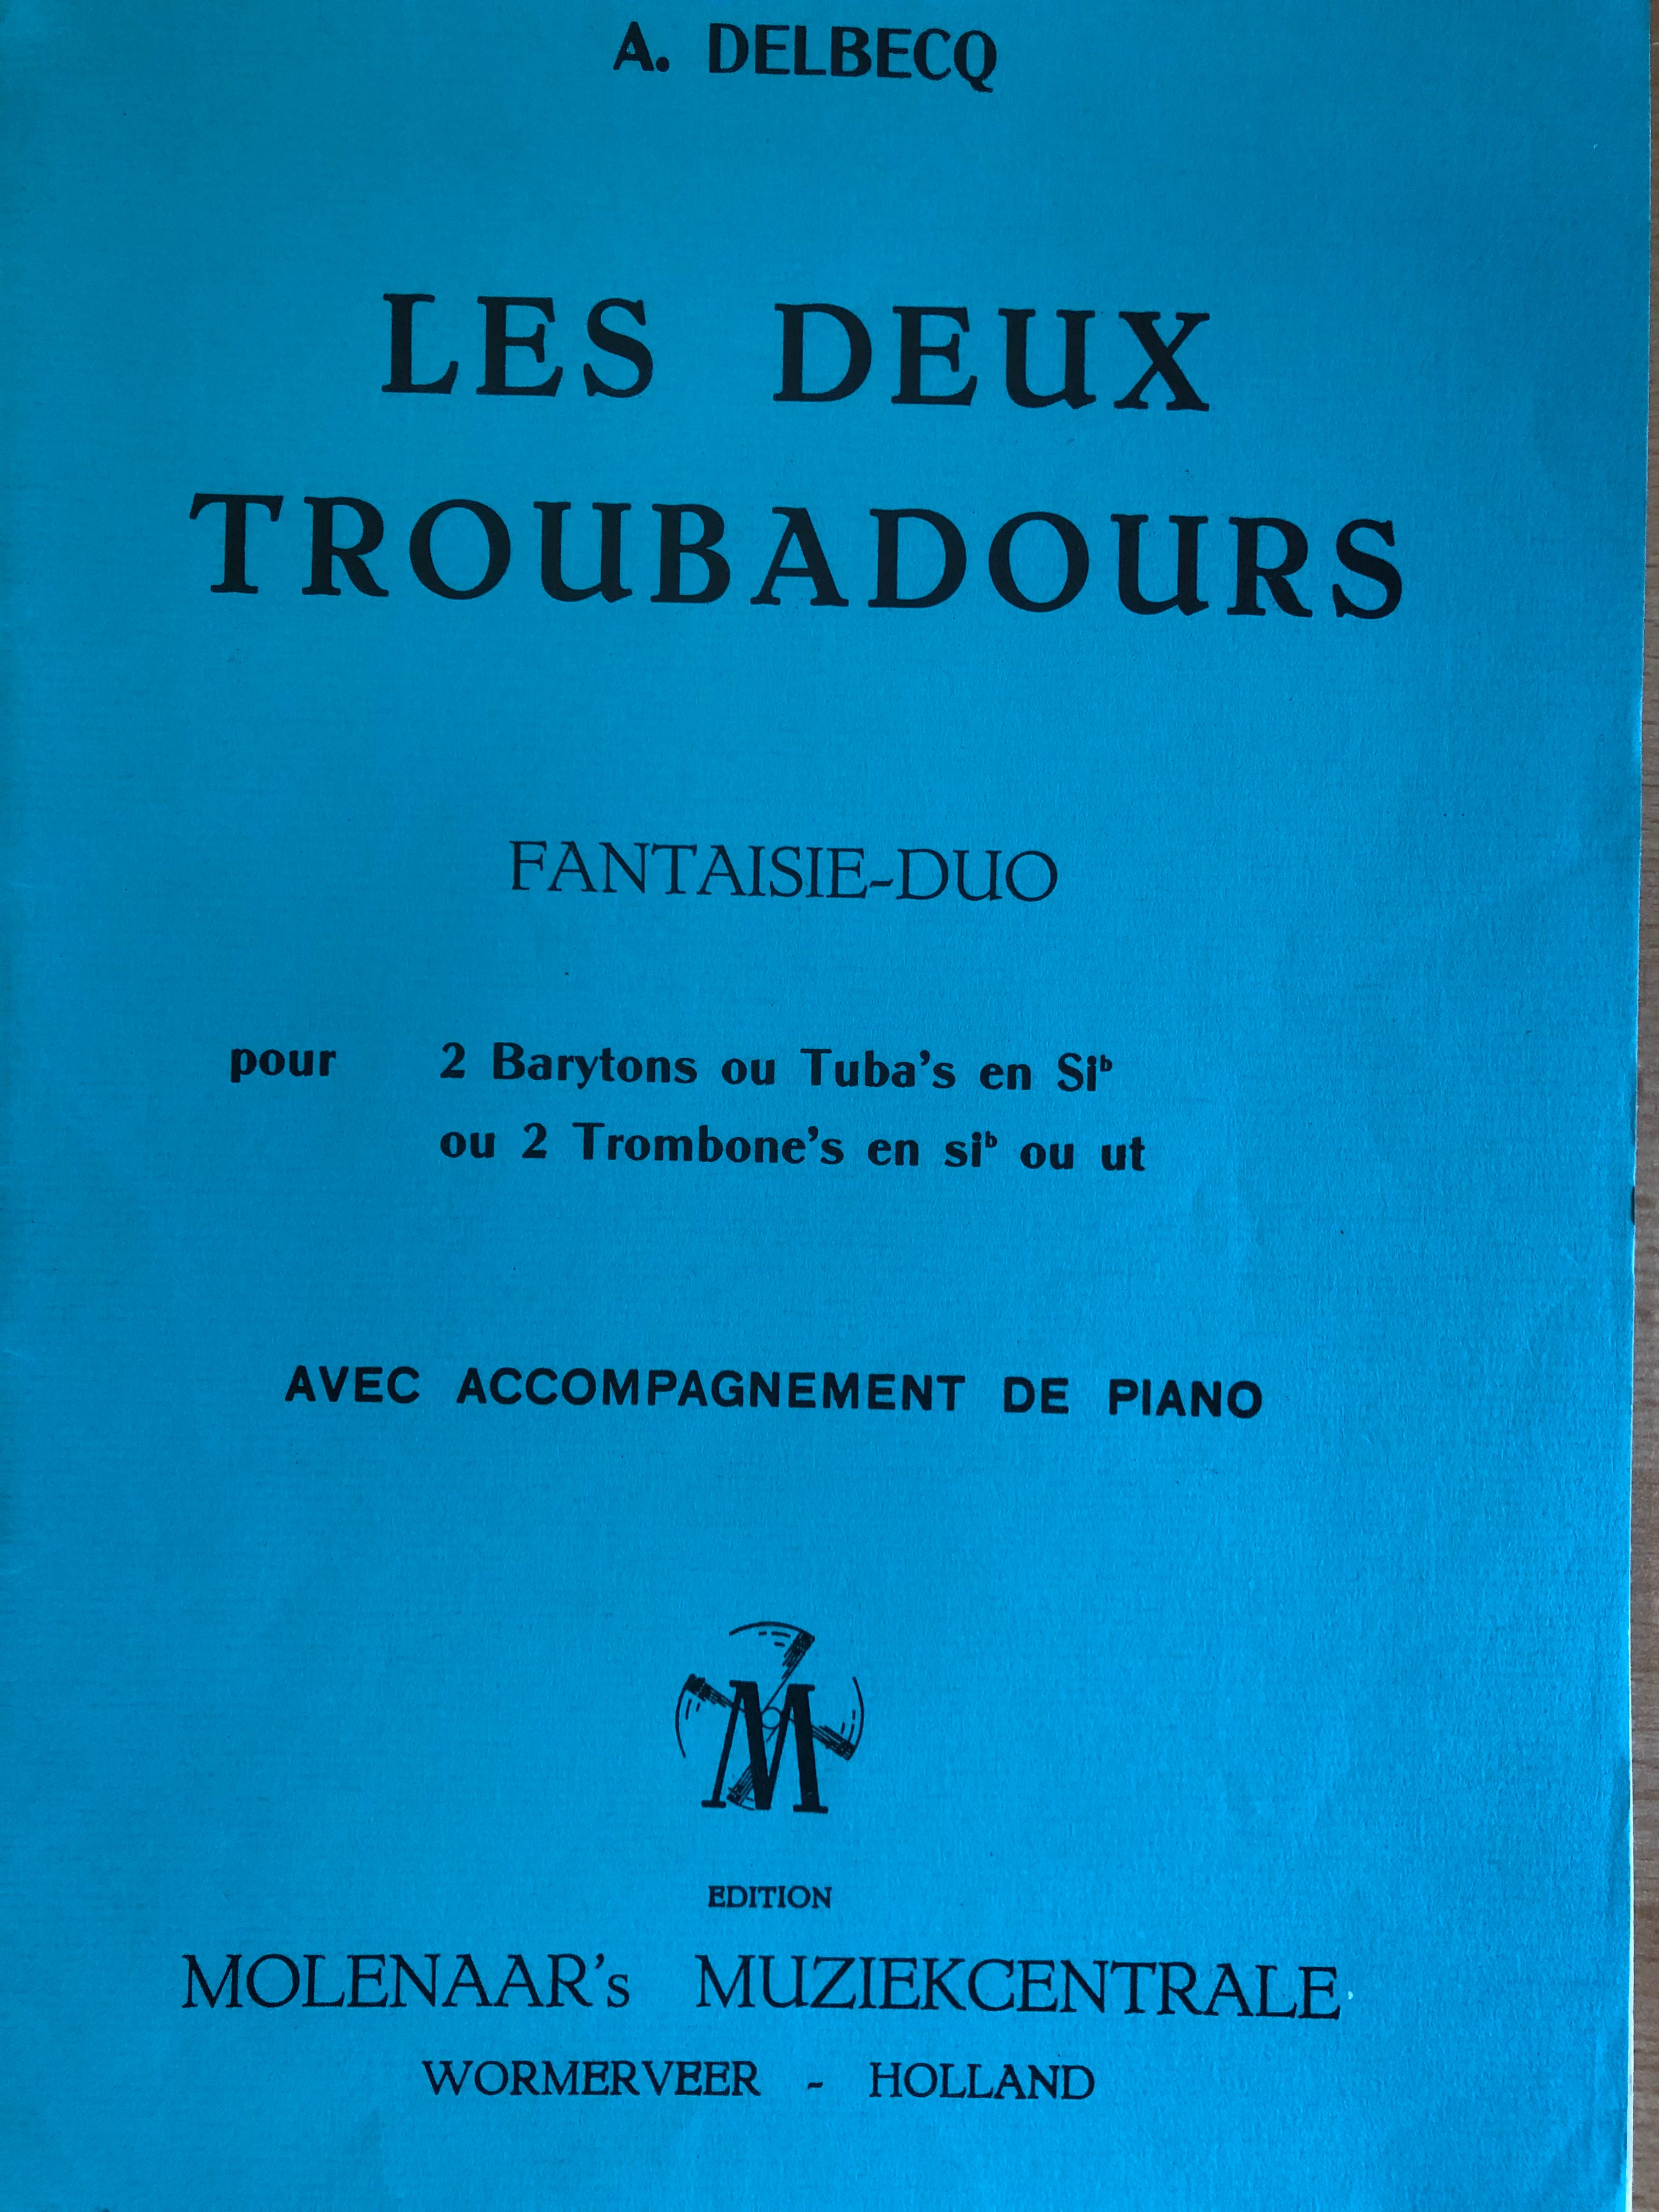 Les Deux Troubadours, Delbecq, Piano accompagnement - Scattando Verkleedhuis